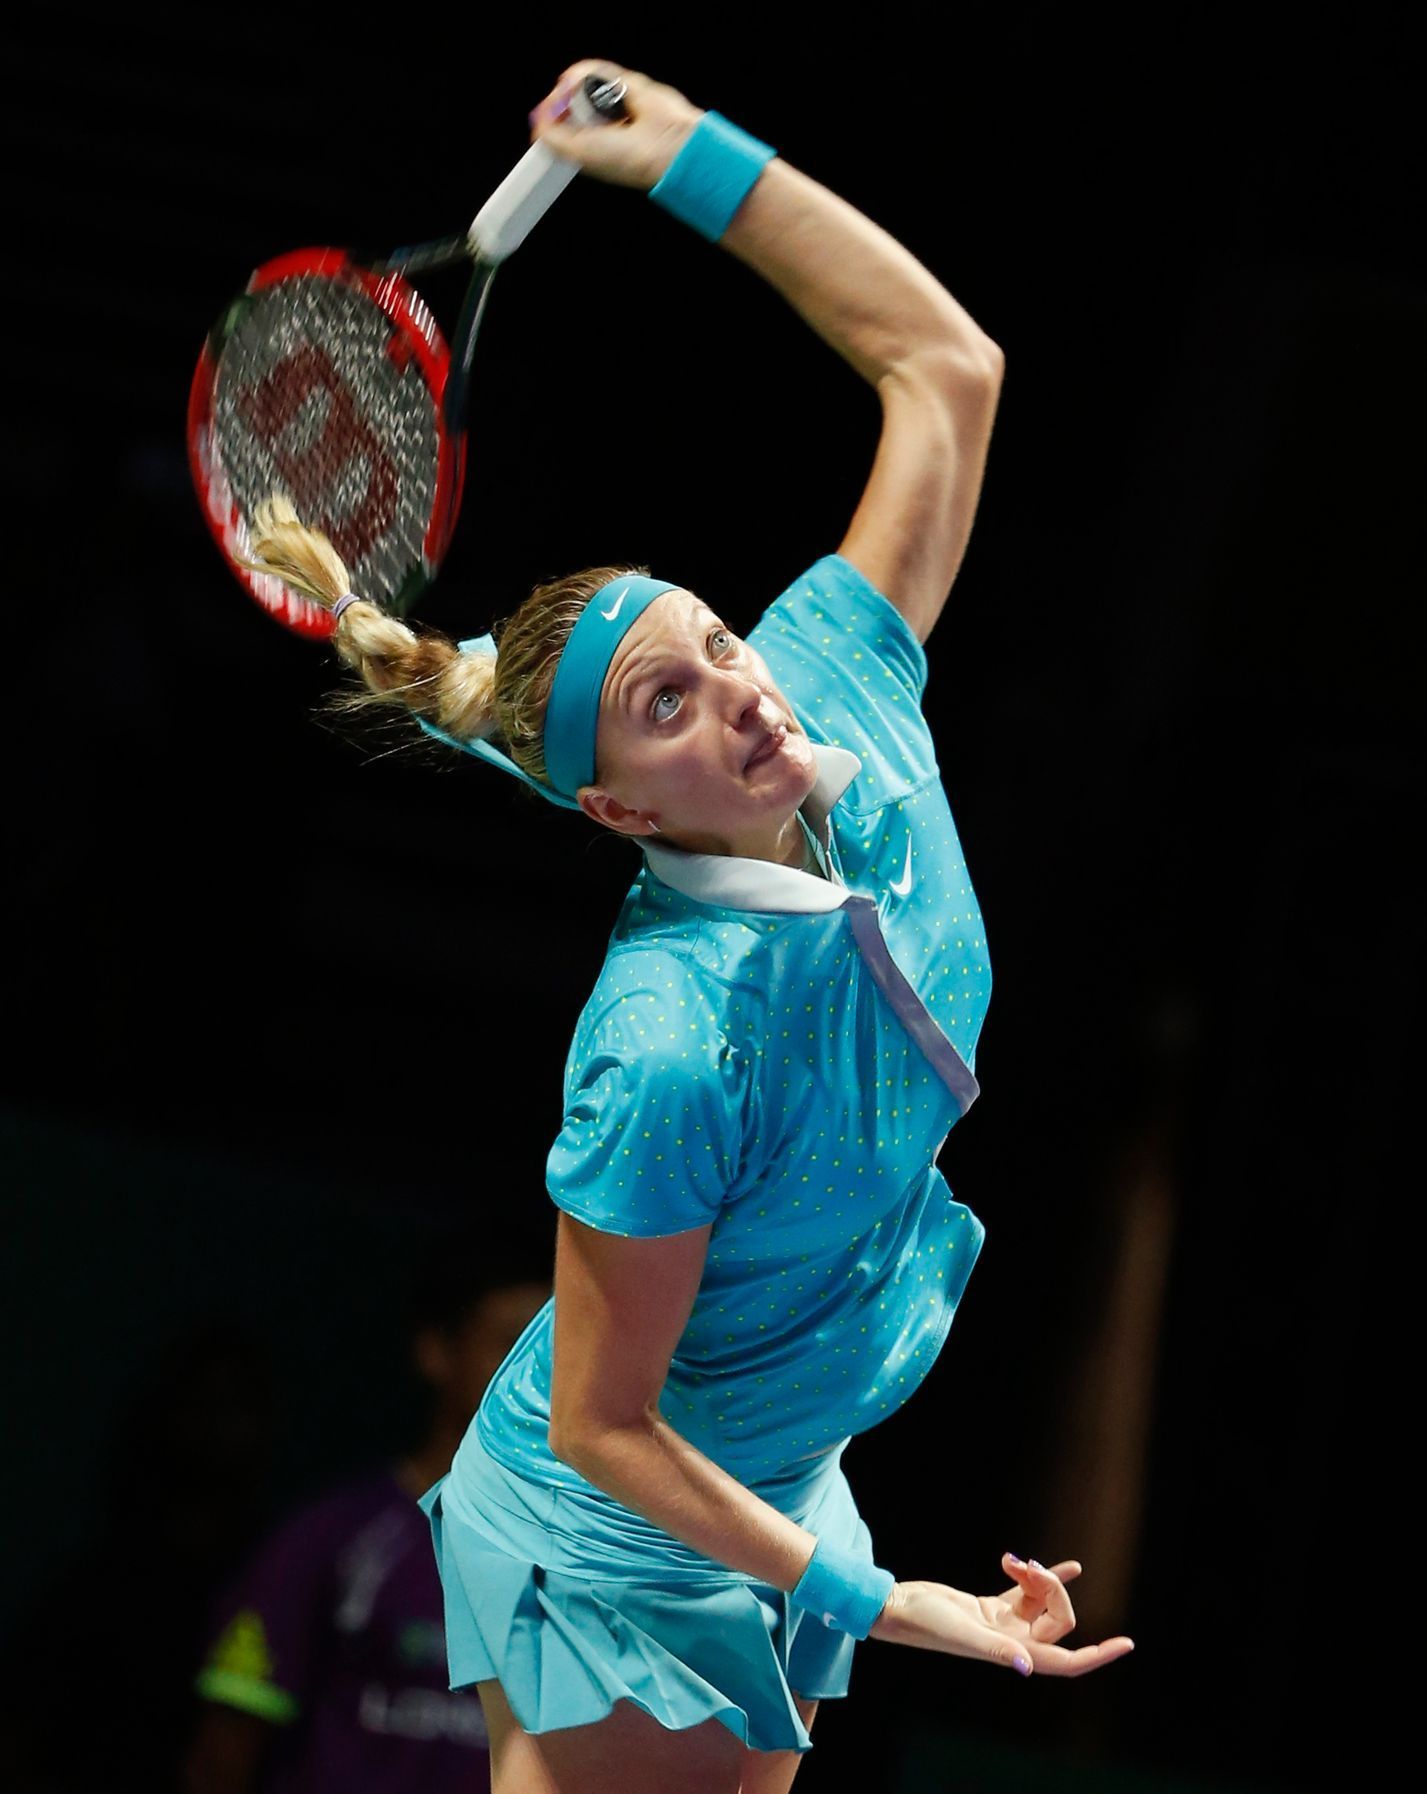 Petra Kvitova of the Czech Republic serves against Maria Sharapova of Russia during their WTA Finals singles tennis match at the Singapore Indoor Stadium